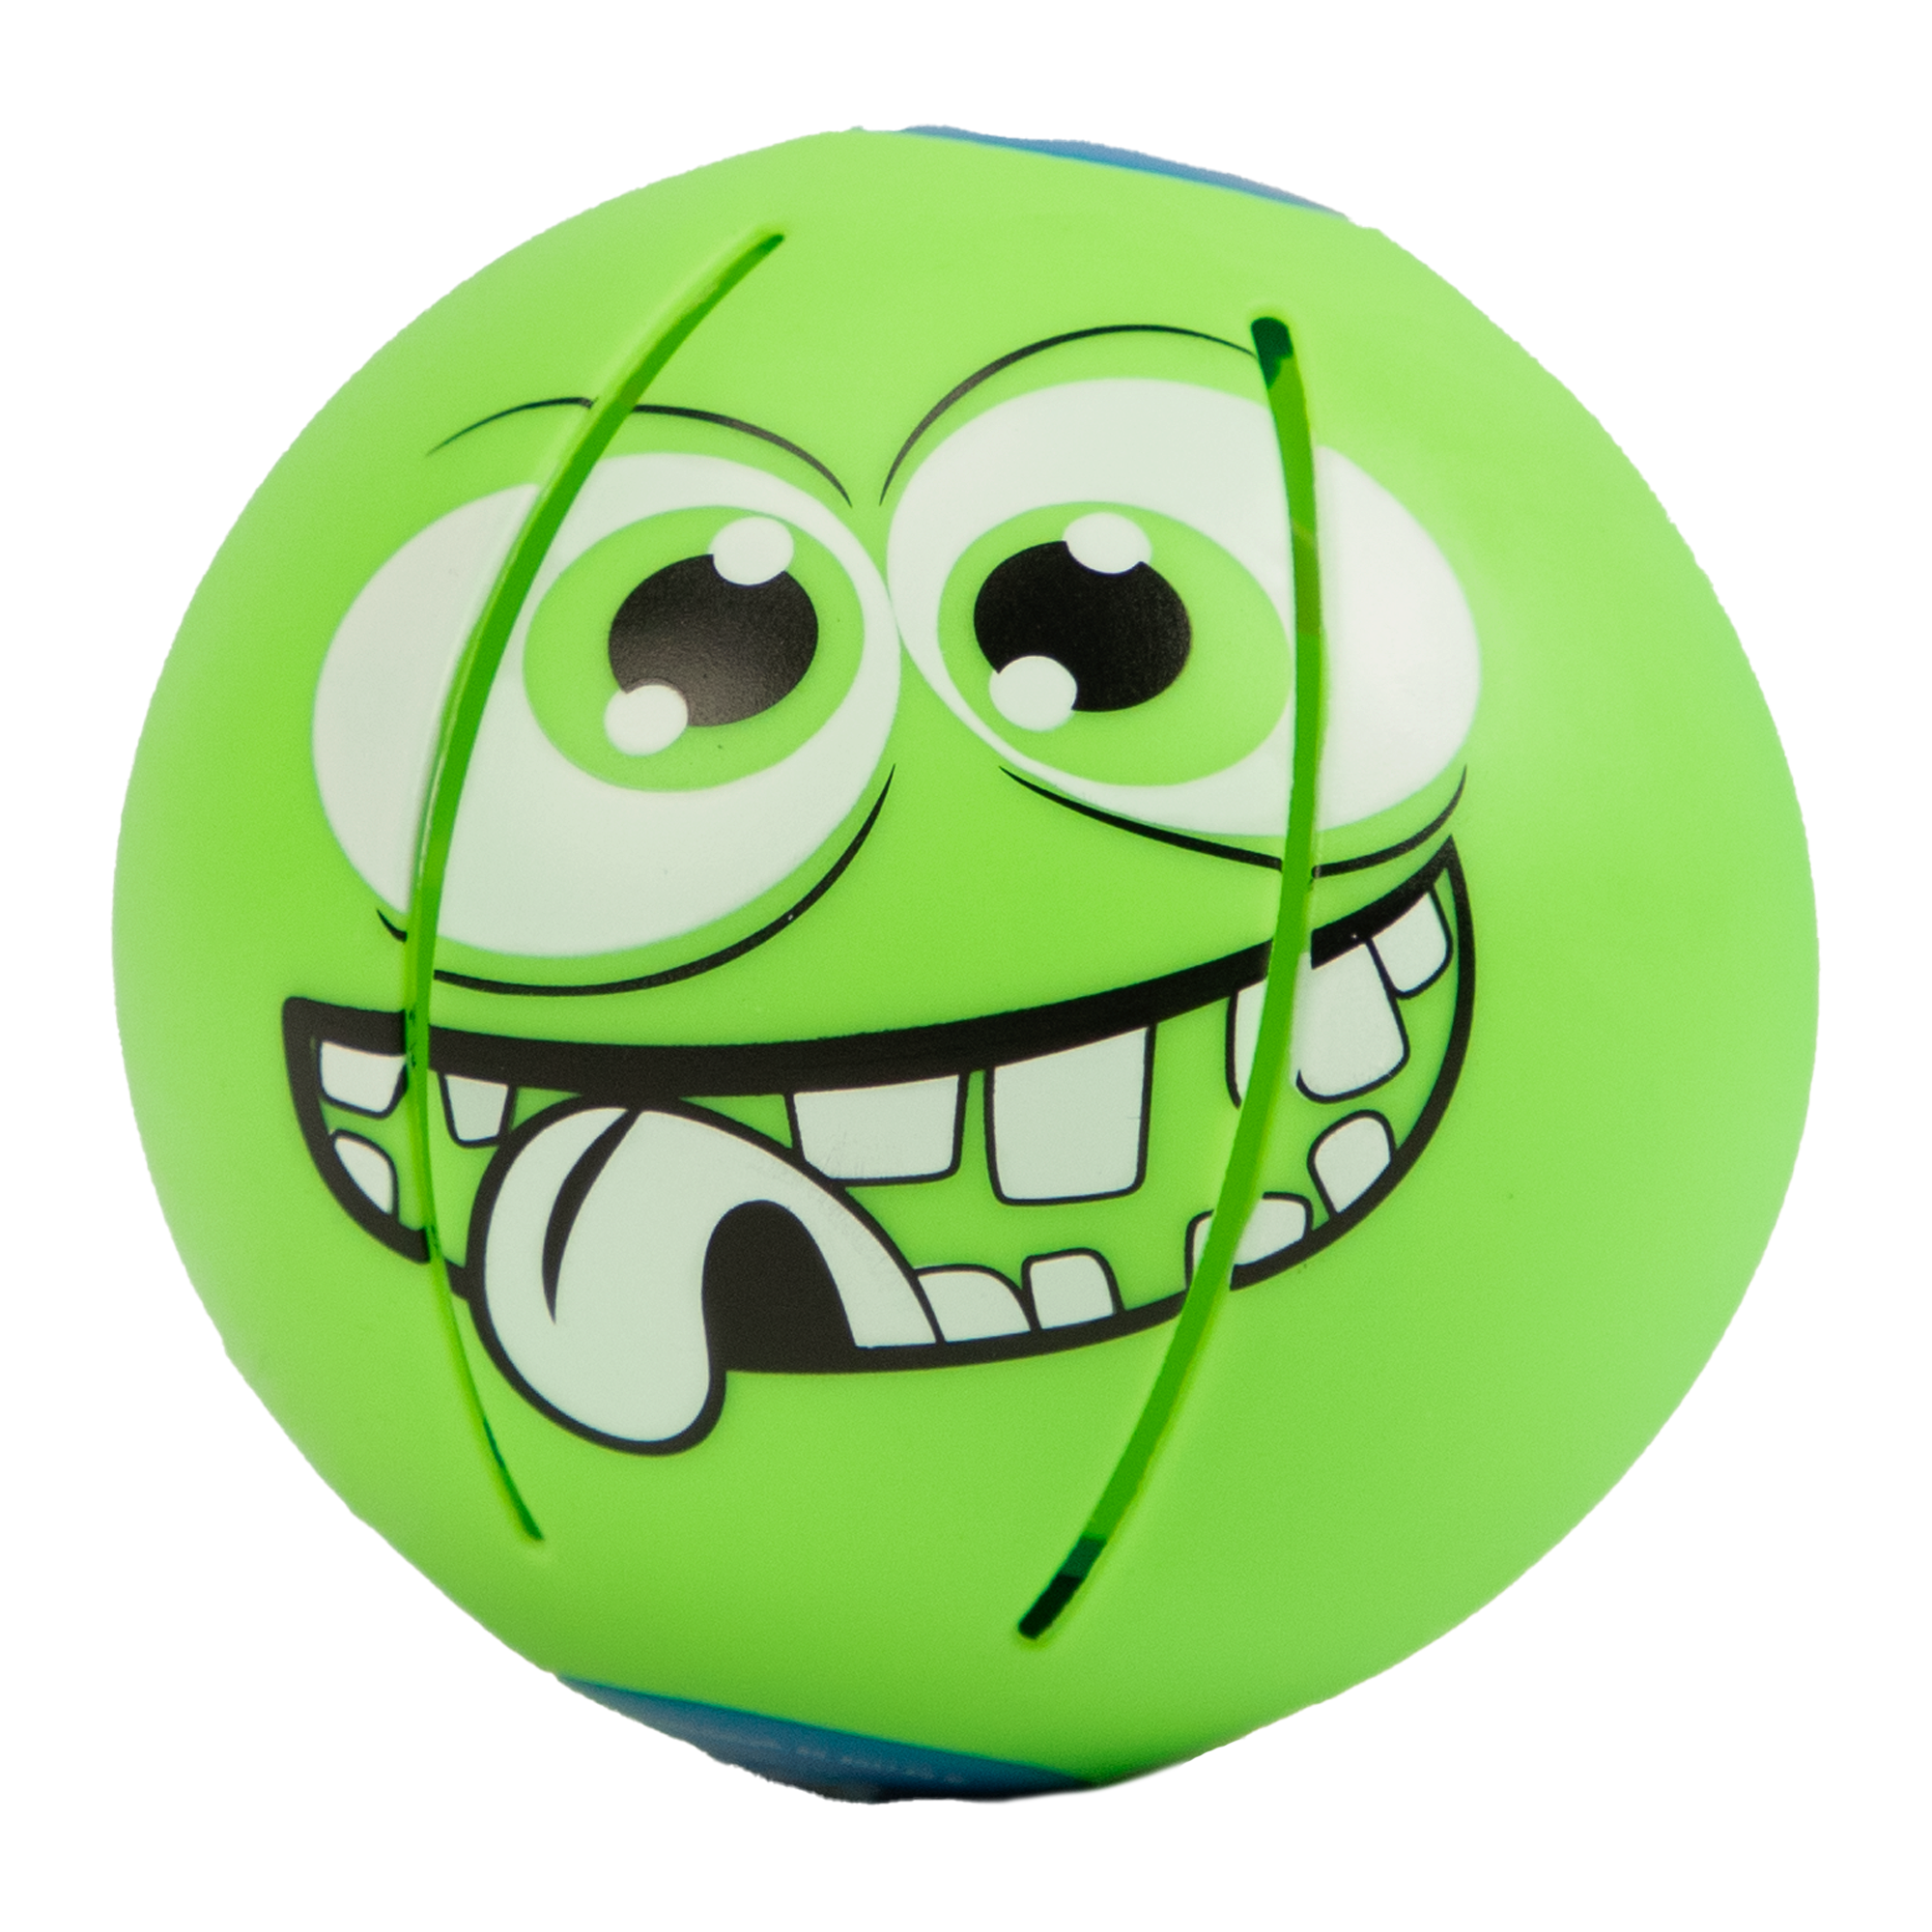 Phlat Ball Mini Monster: Kompakt, tragbar, und voller Spaß!